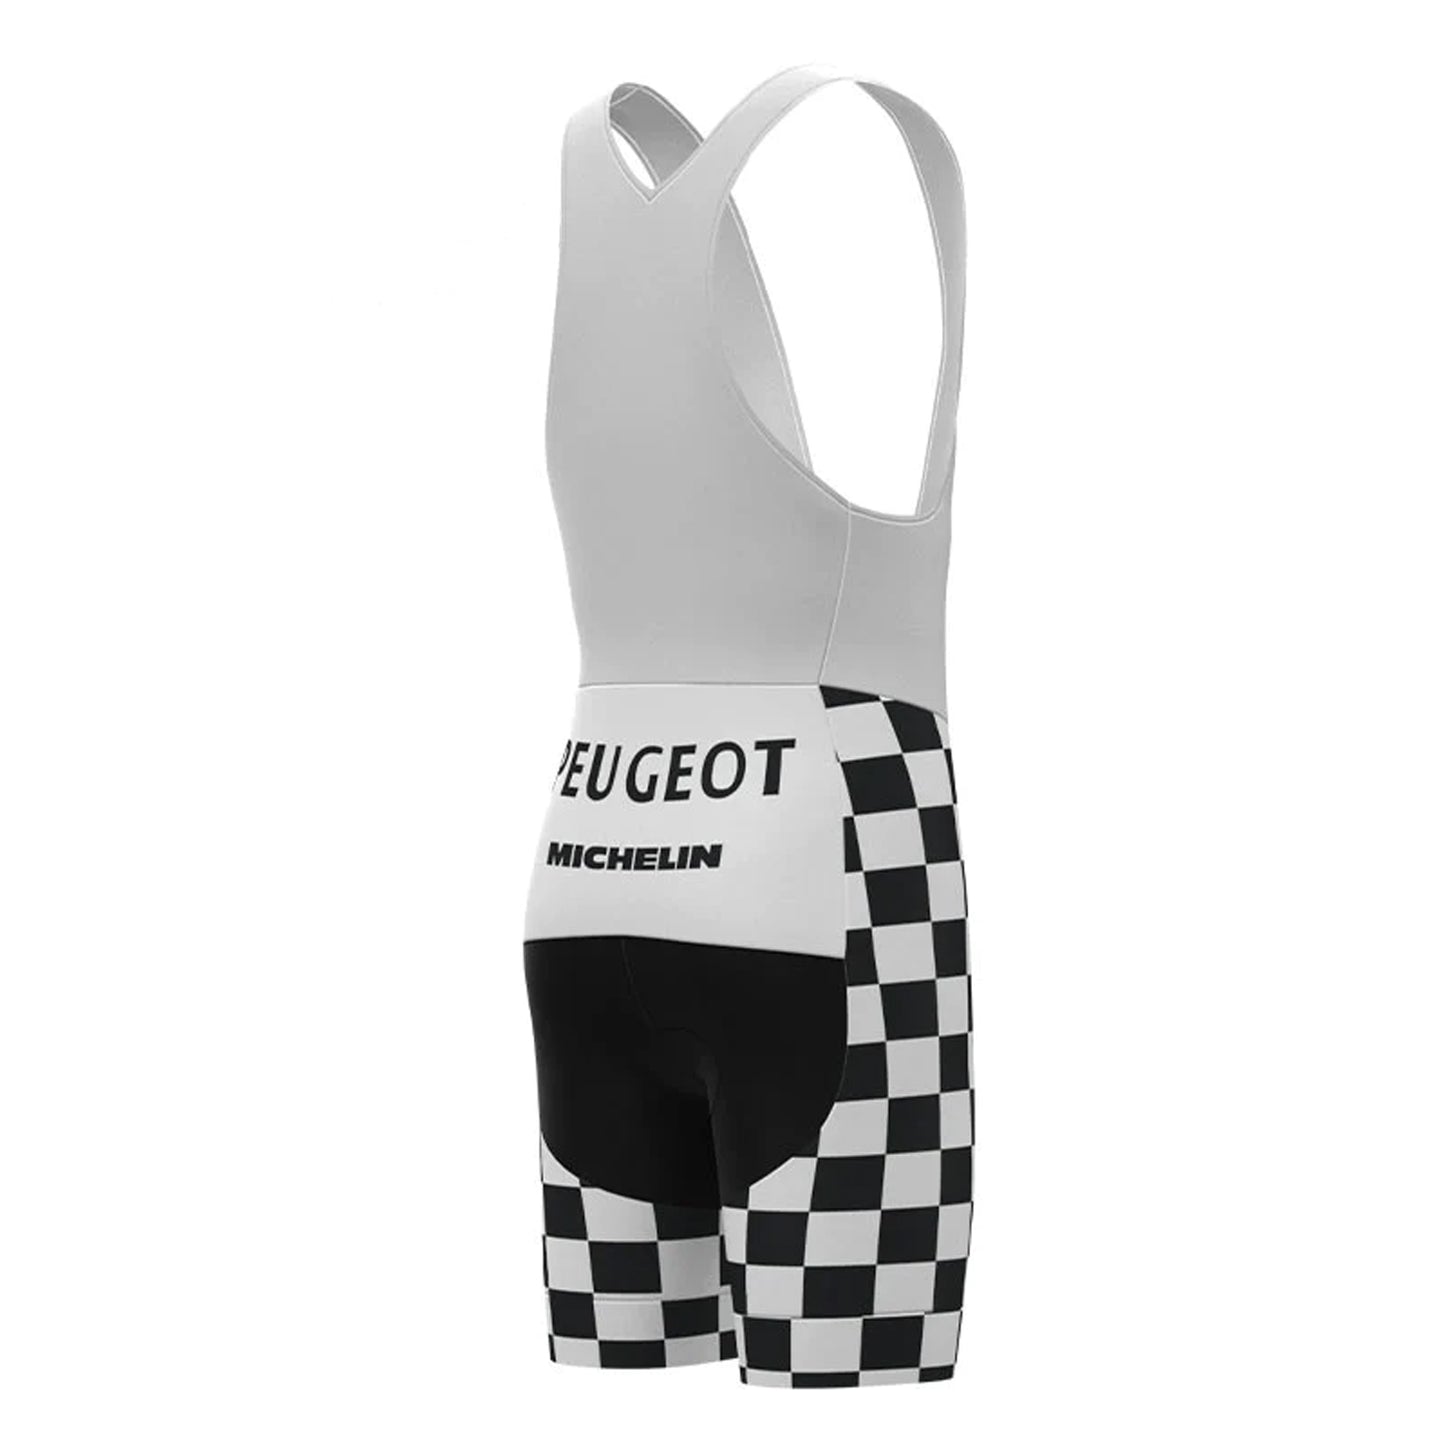 Peugeot Black Vintage Cycling Bib Shorts